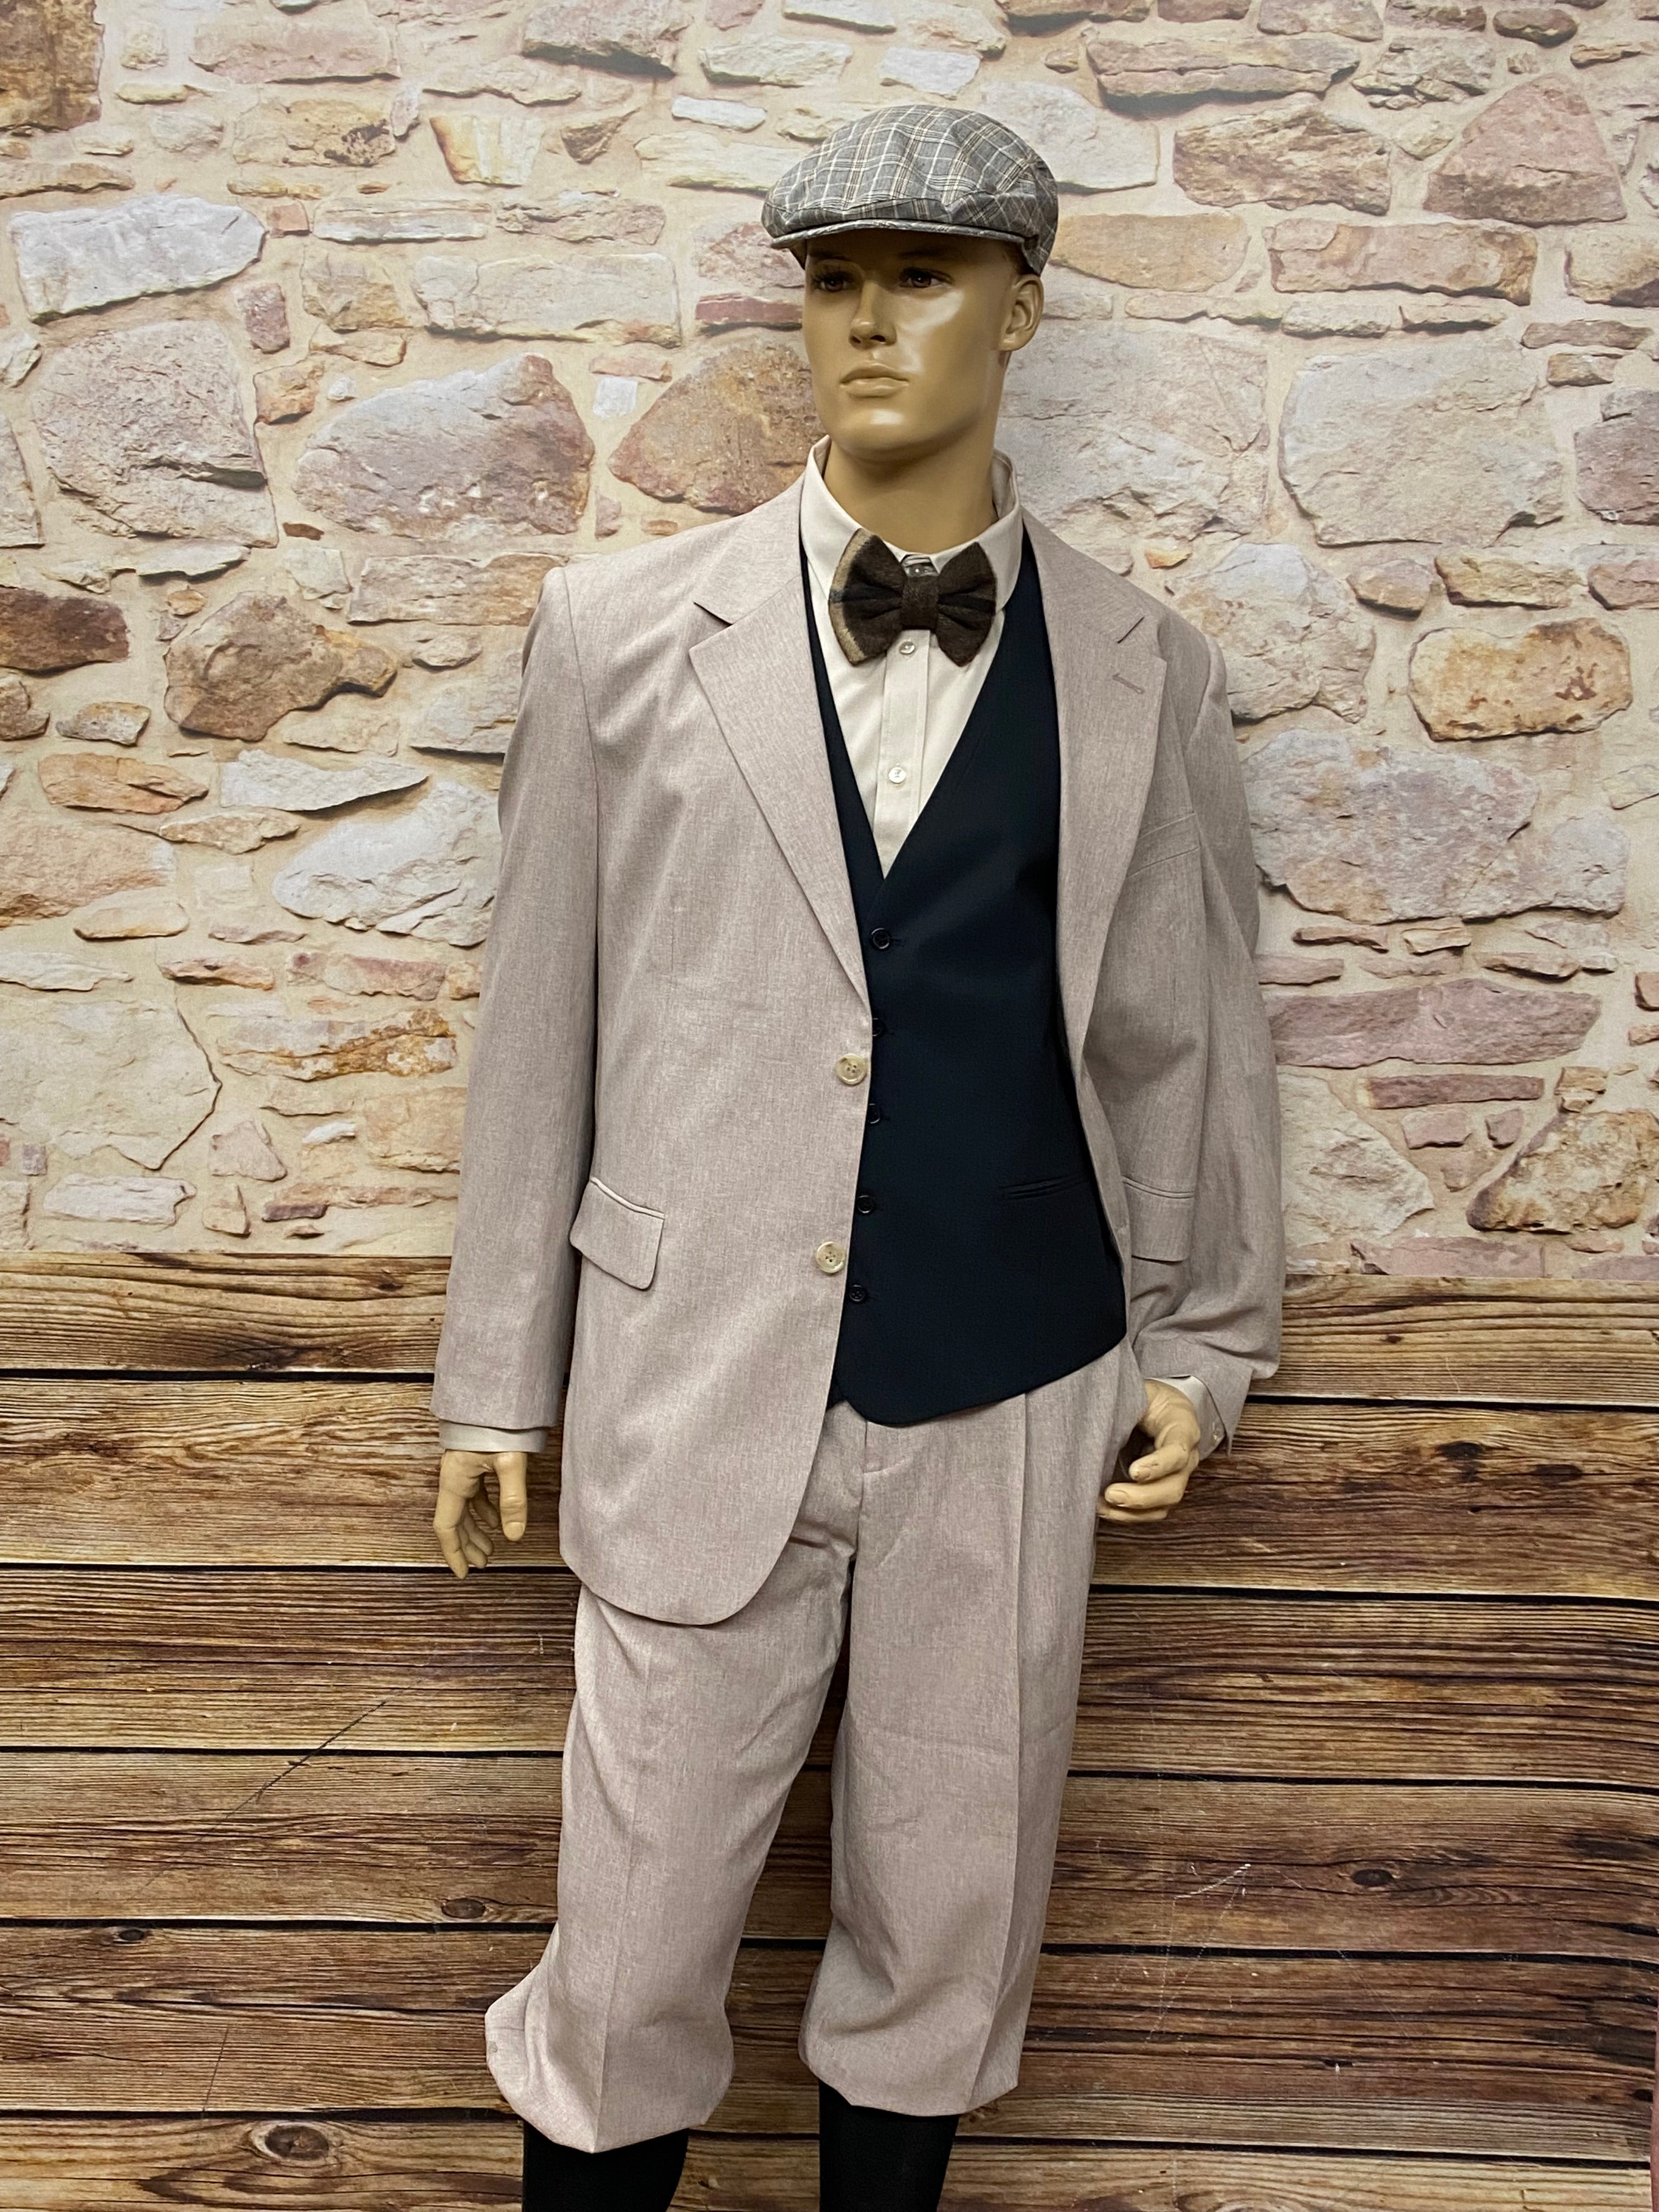 20er Jahre Mode Männer Outfit mit Knickerbocker HoseGr.58